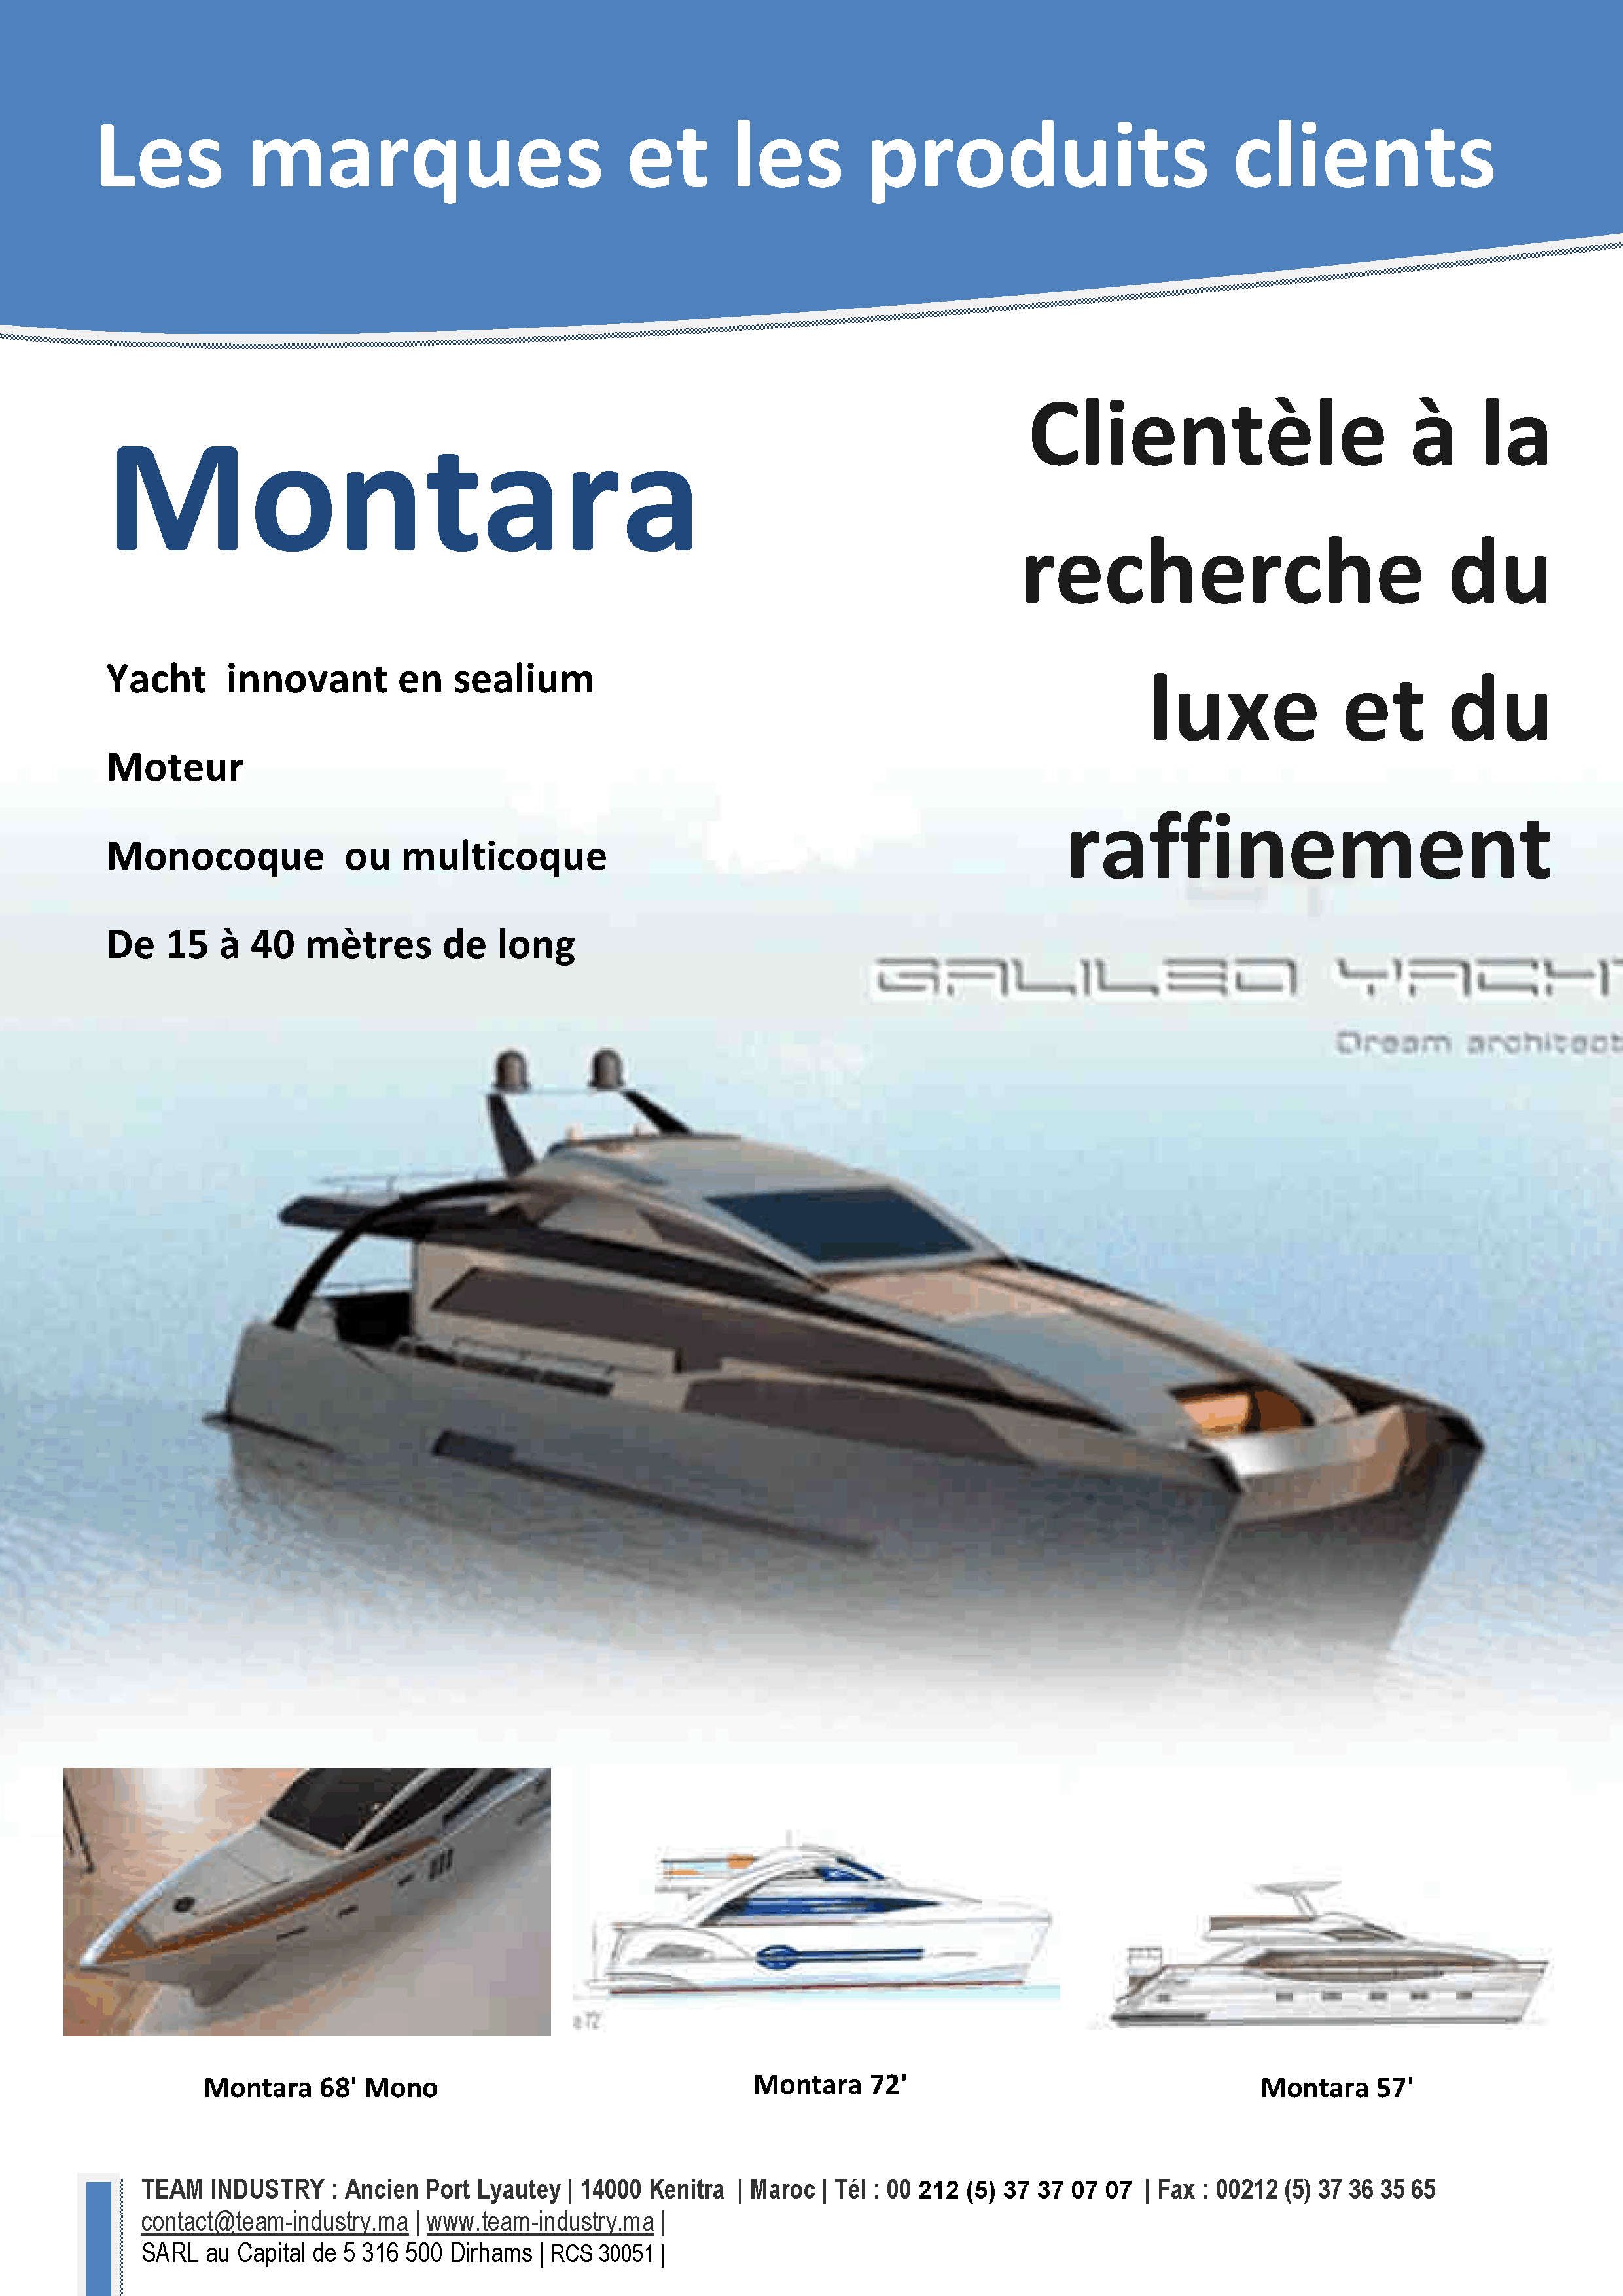 Présentation Montara yacht - groupe Simon, Genève